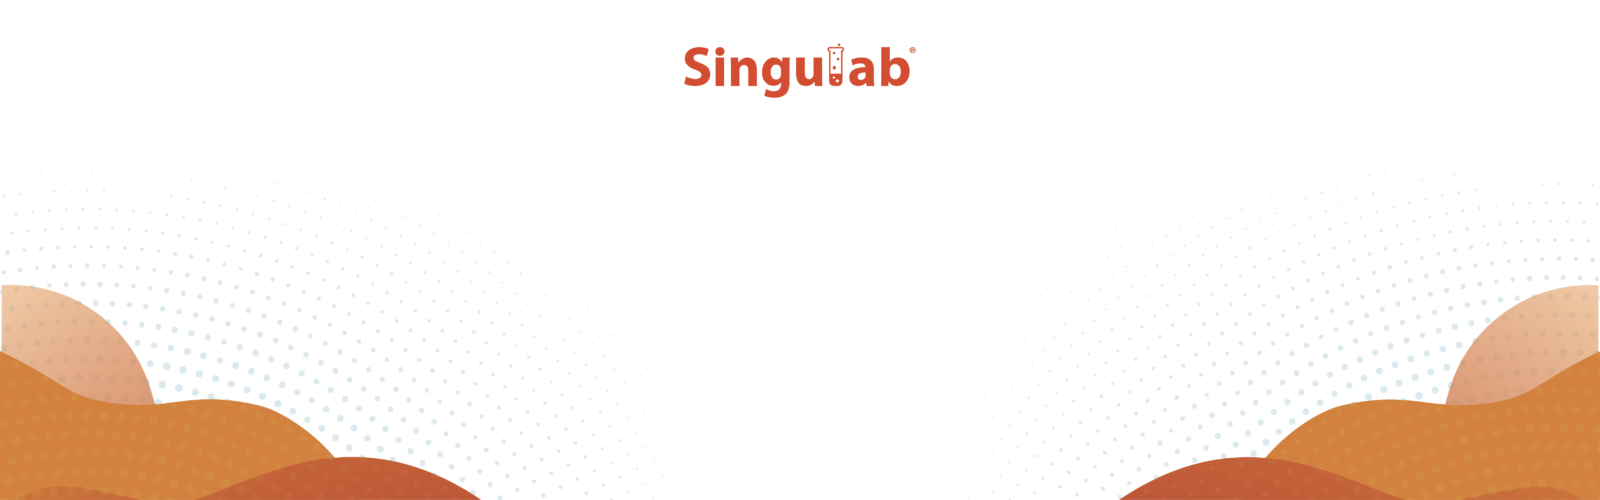 SinguLab® LTC Partner Program Expansion to Chicago, IL